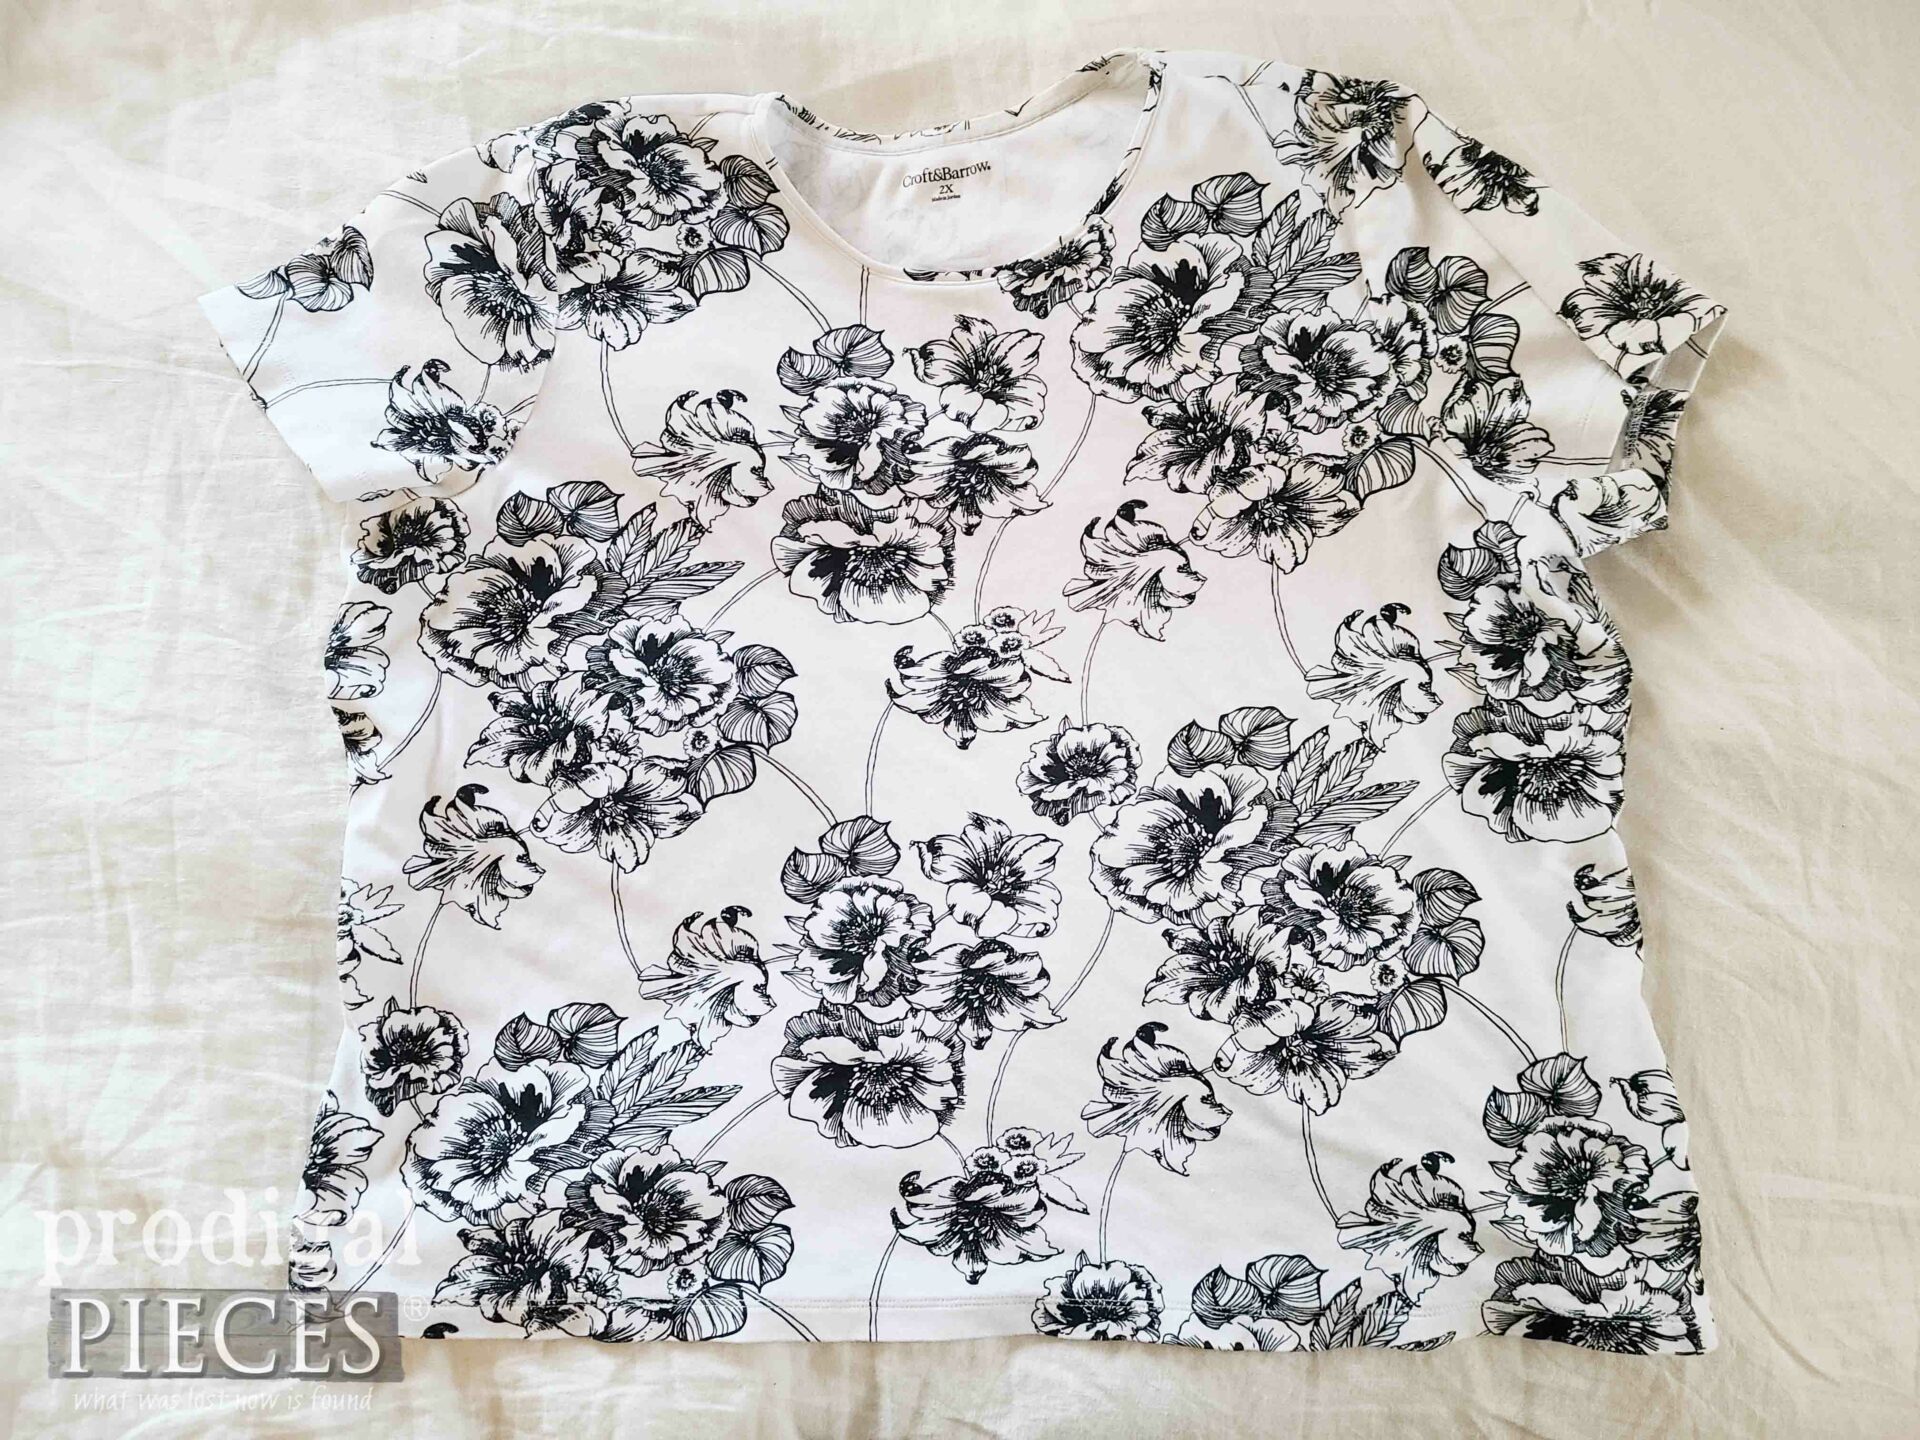 Ladies Floral Print Jersey Shirt for DIY Hair Towel | prodigalpieces.com #prodigalpieces